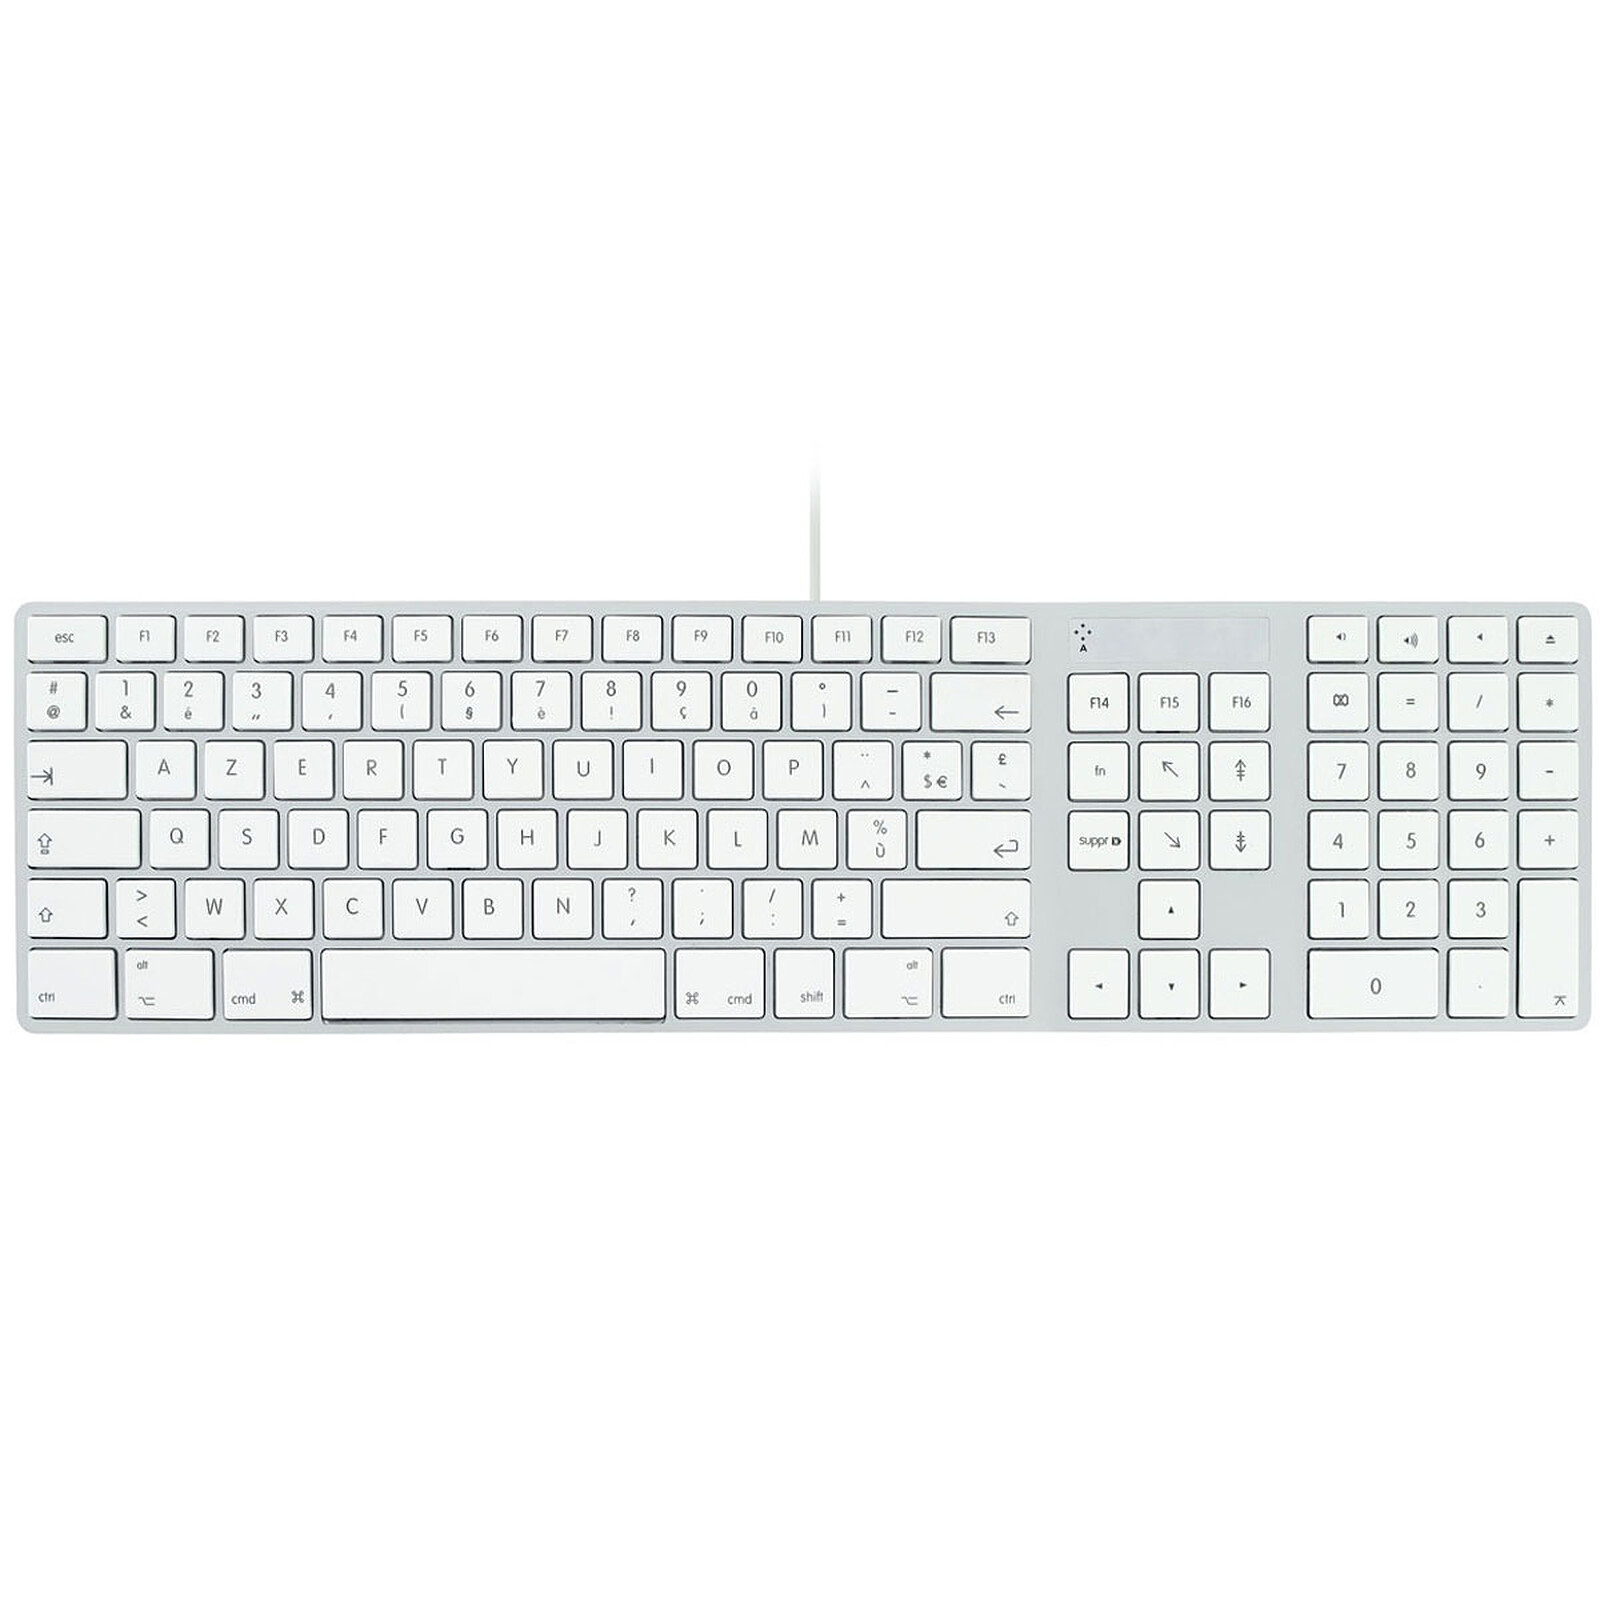 Logitech Desktop MK120 - Pack clavier souris - Garantie 3 ans LDLC